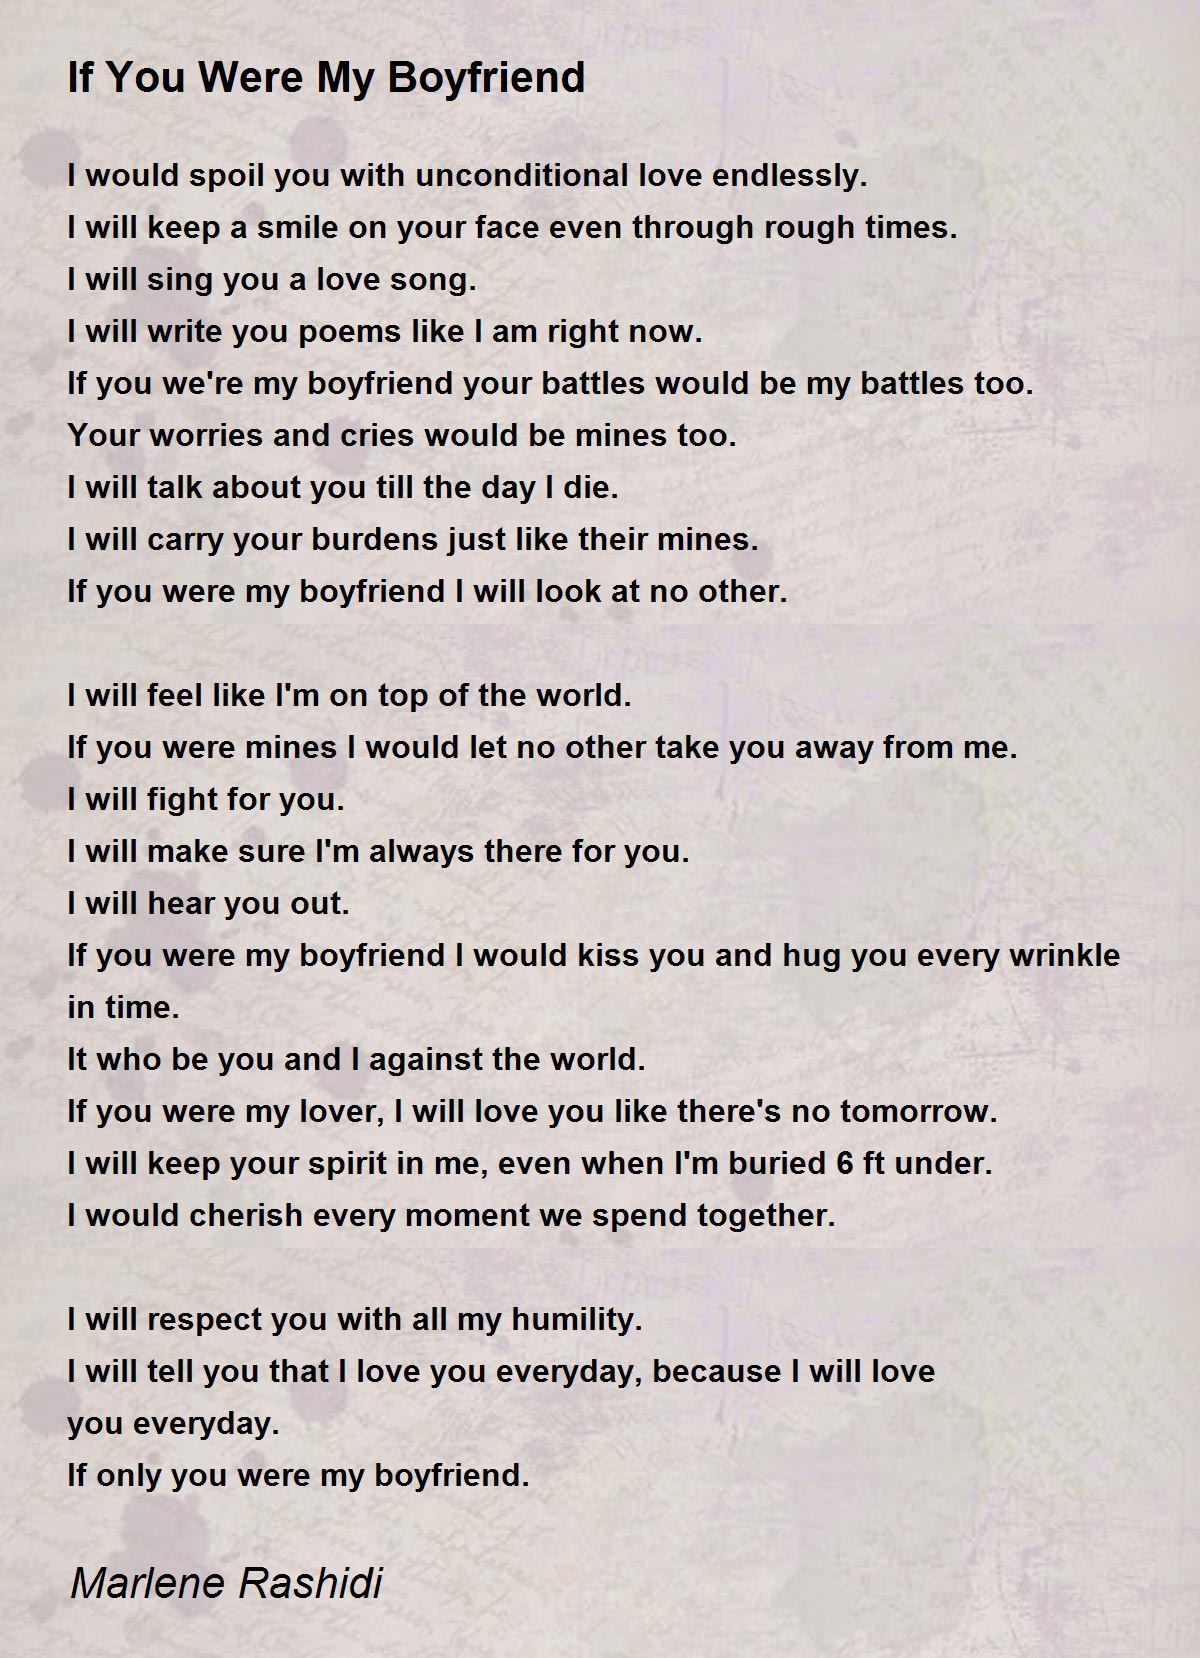 If I Were Your Boyfriend If You Were My Boyfriend - If You Were My Boyfriend Poem by Marlene Rashidi